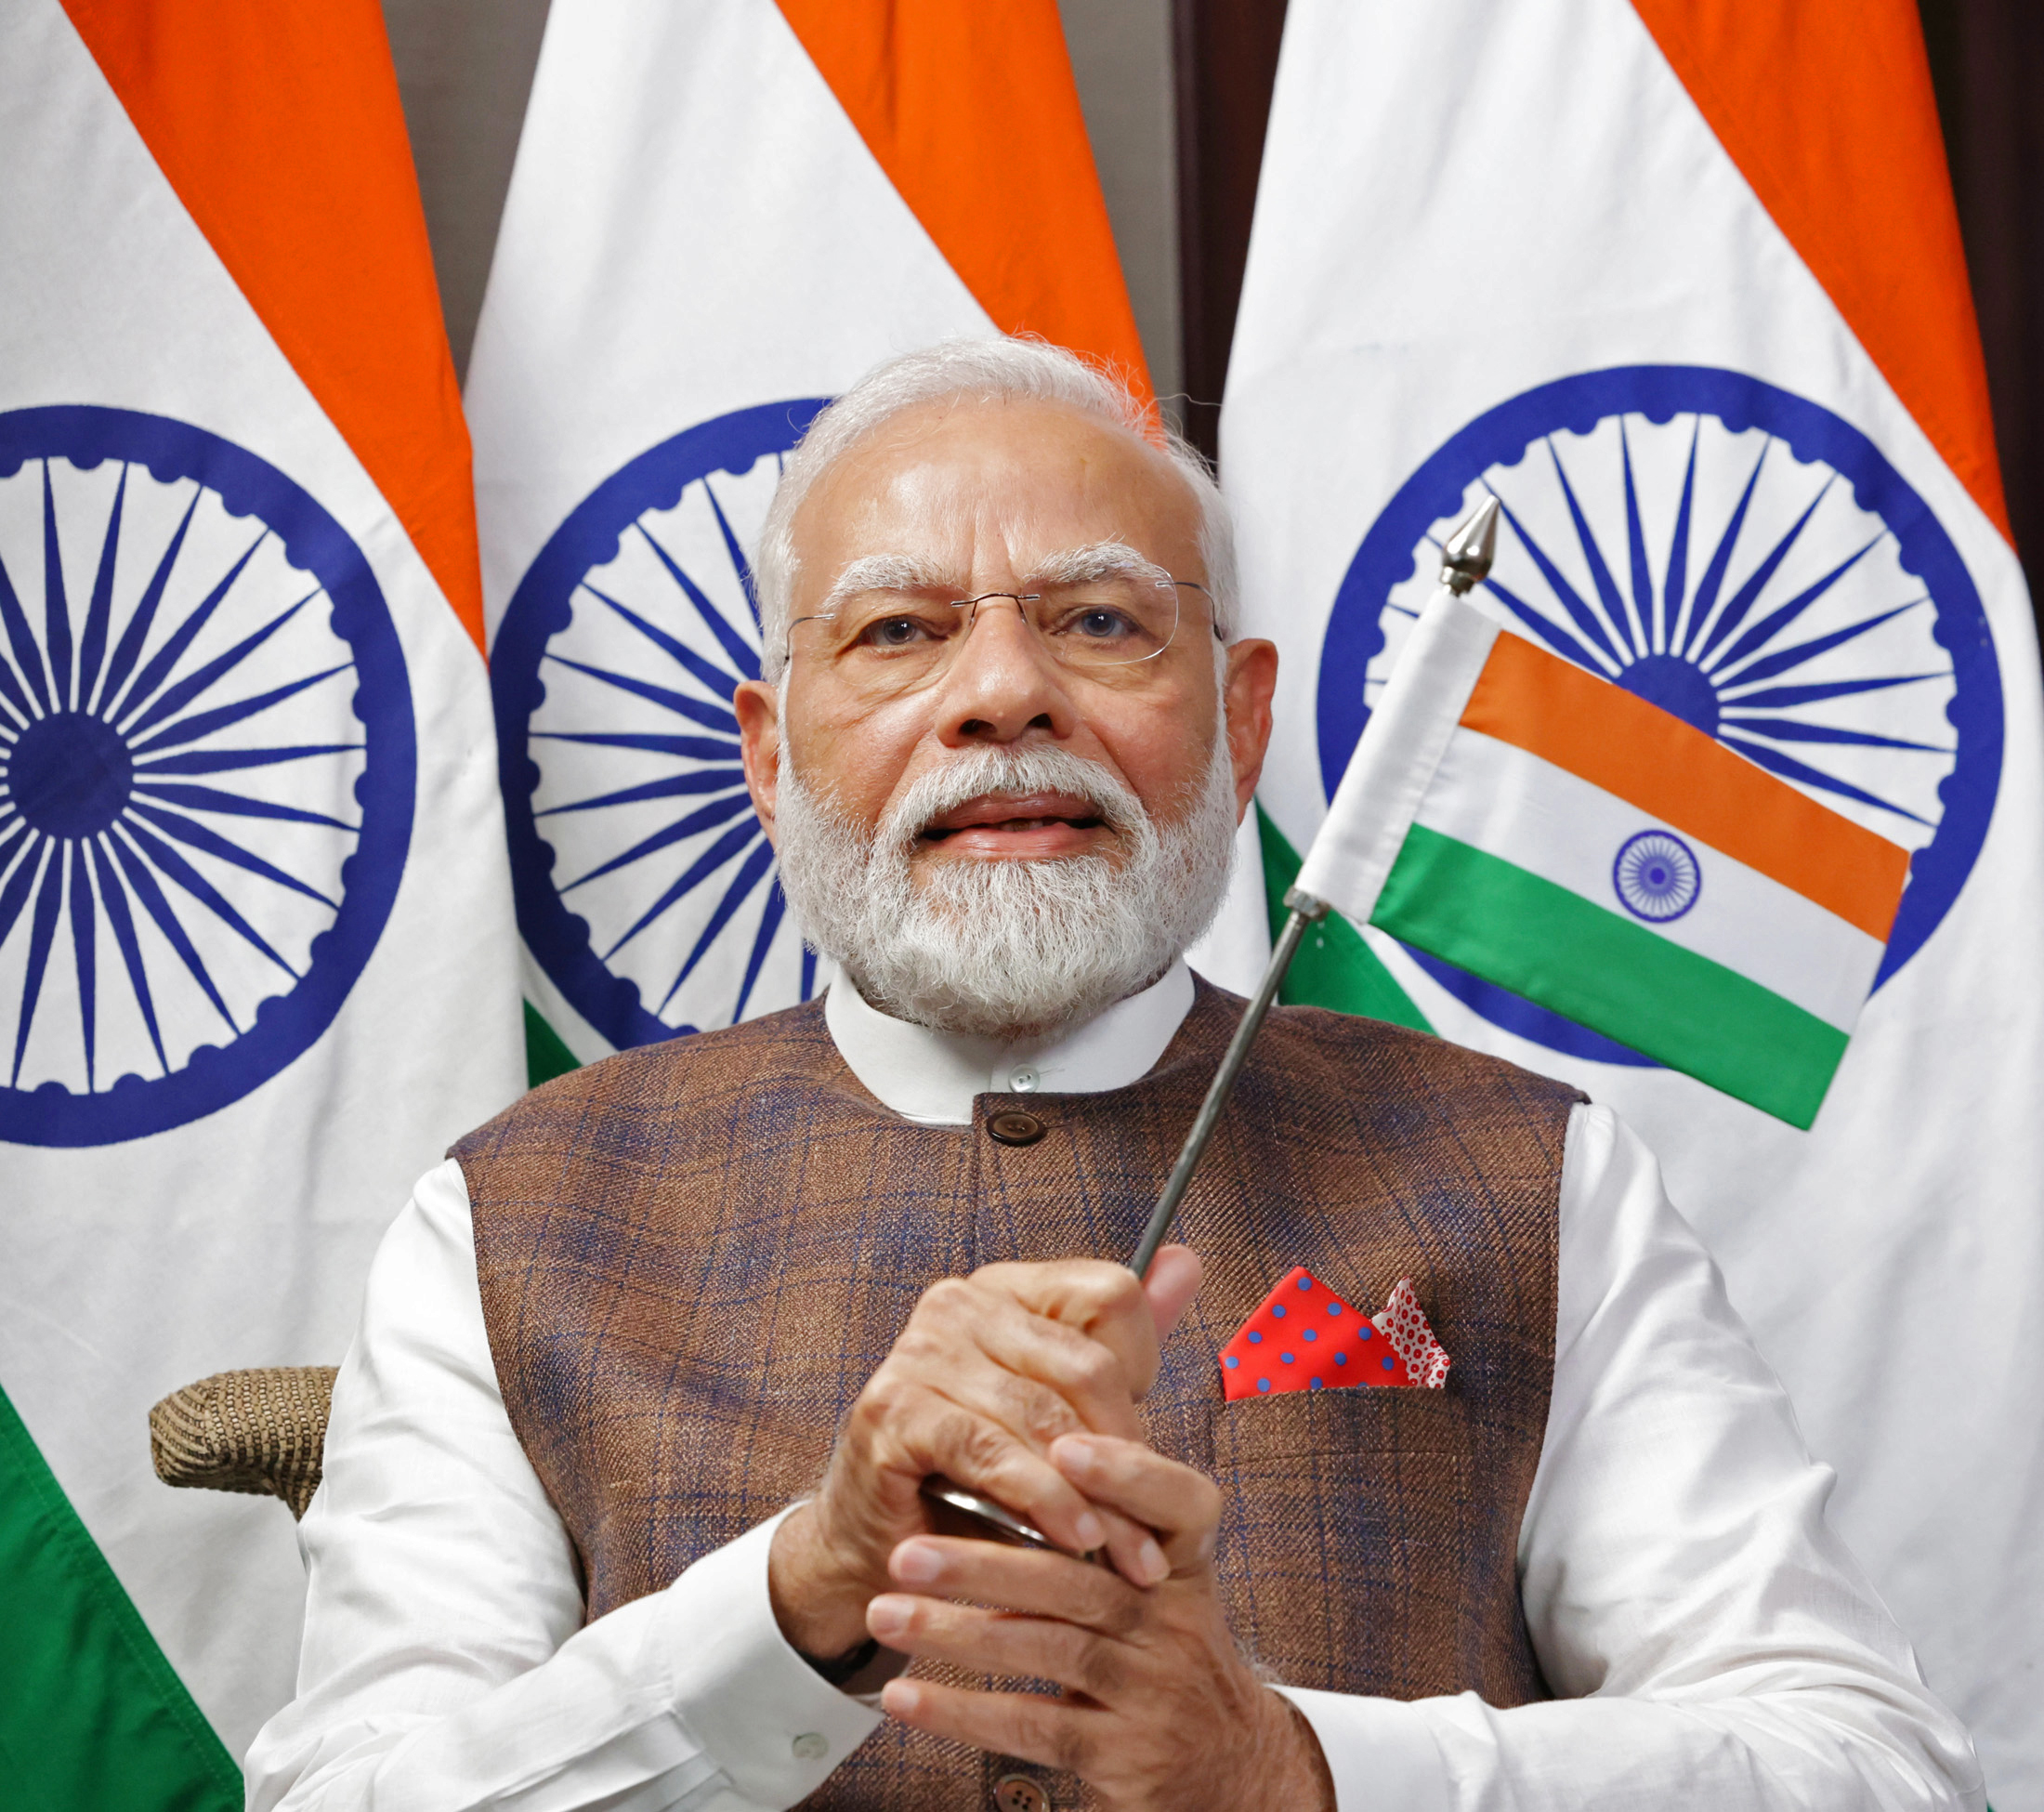 BRICS banquet dinner : World leaders congratulate PM Modi on the success of Chandrayaan-3